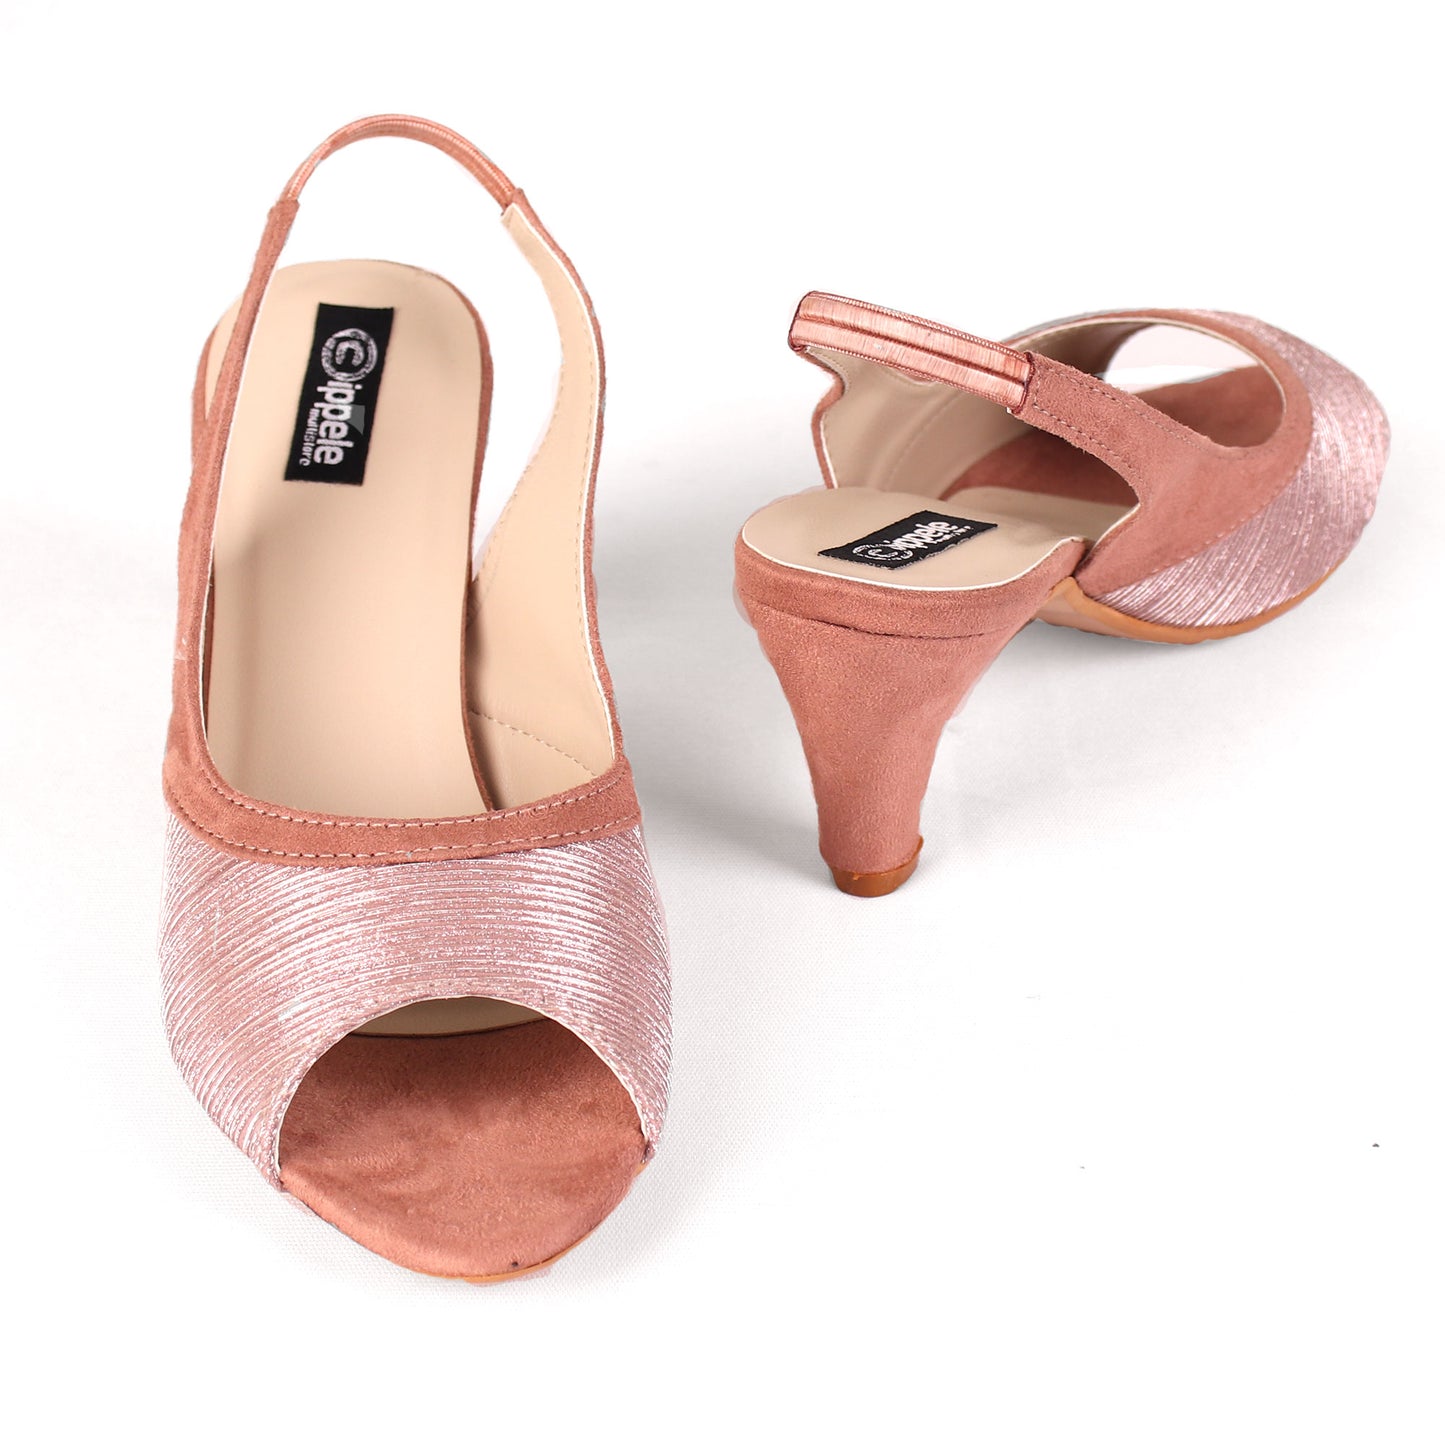 Foot Wear,The Artistic Scrub Heel in Rose Gold Pink - Cippele Multi Store